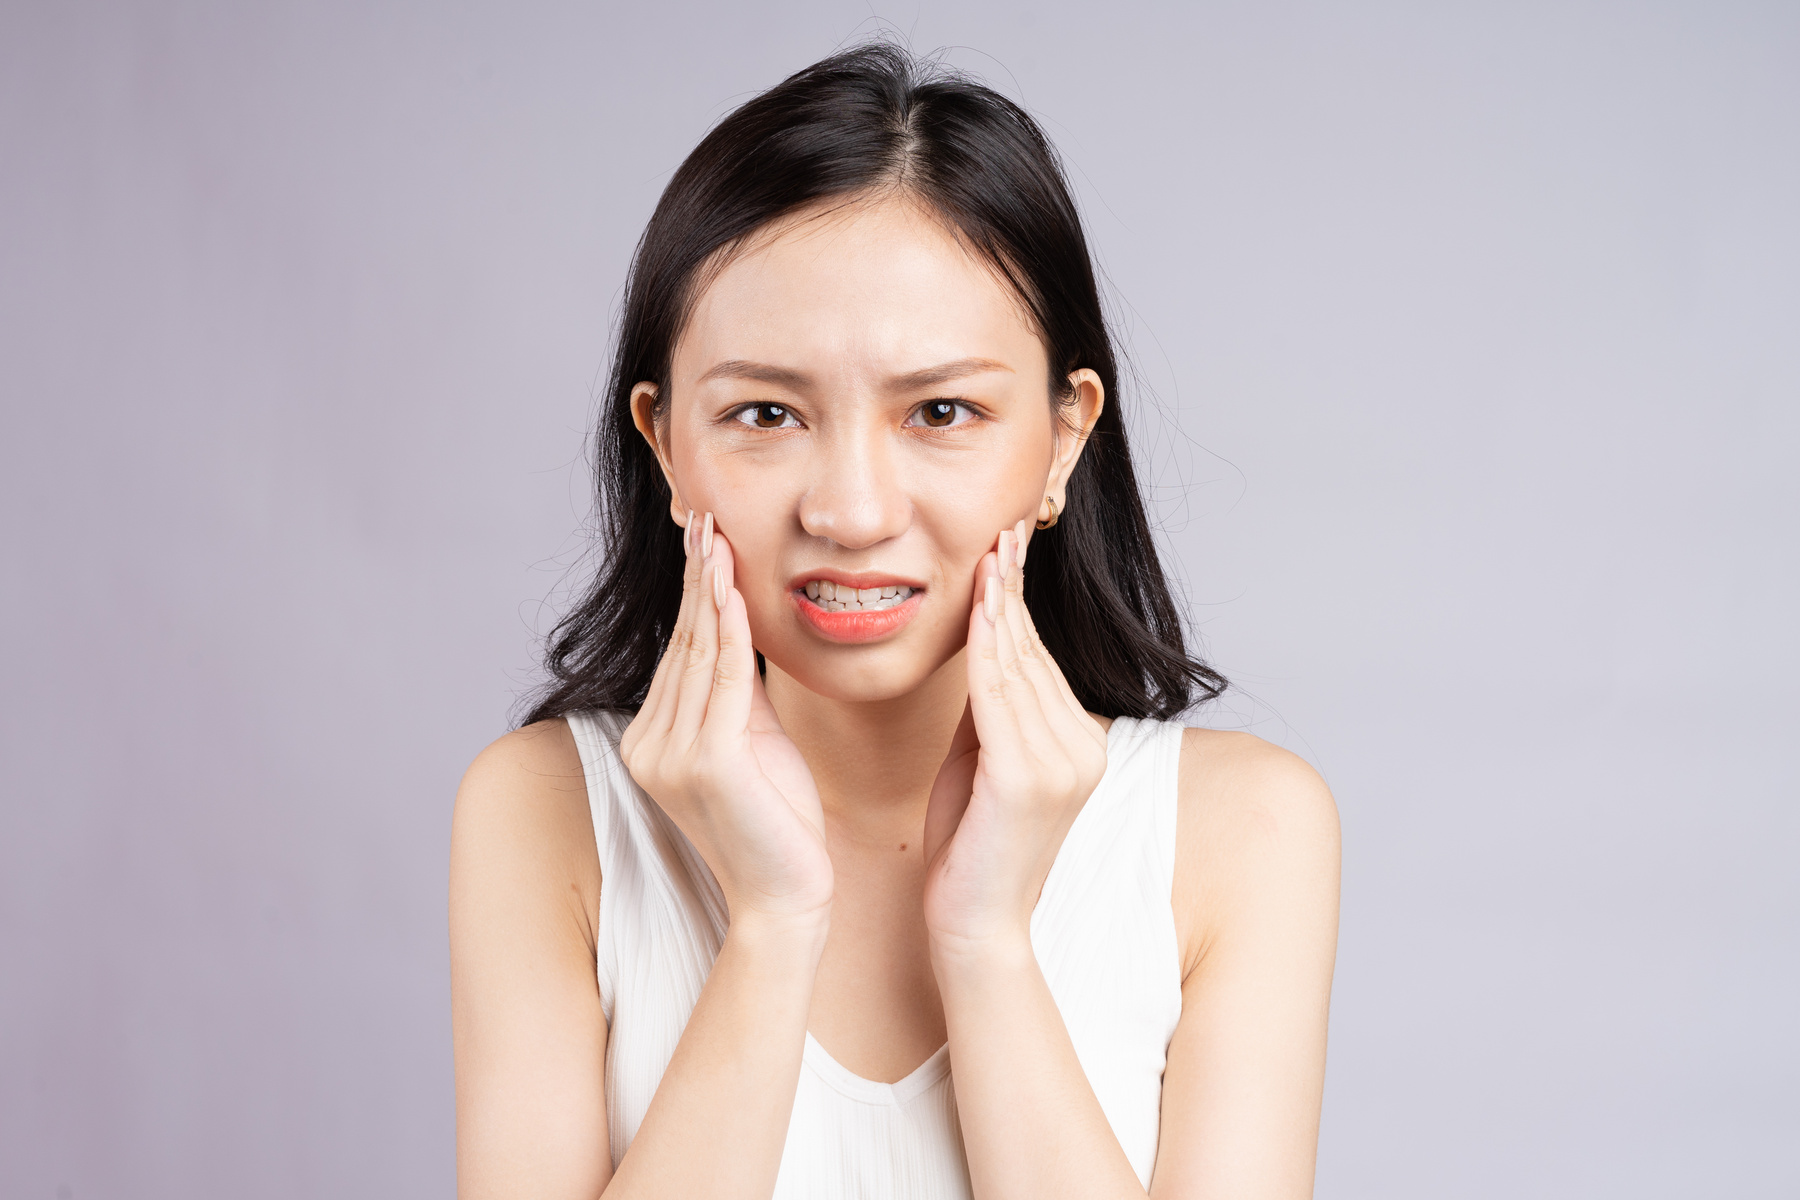 Asian Woman Feels Pain Because of Wisdom Teeth